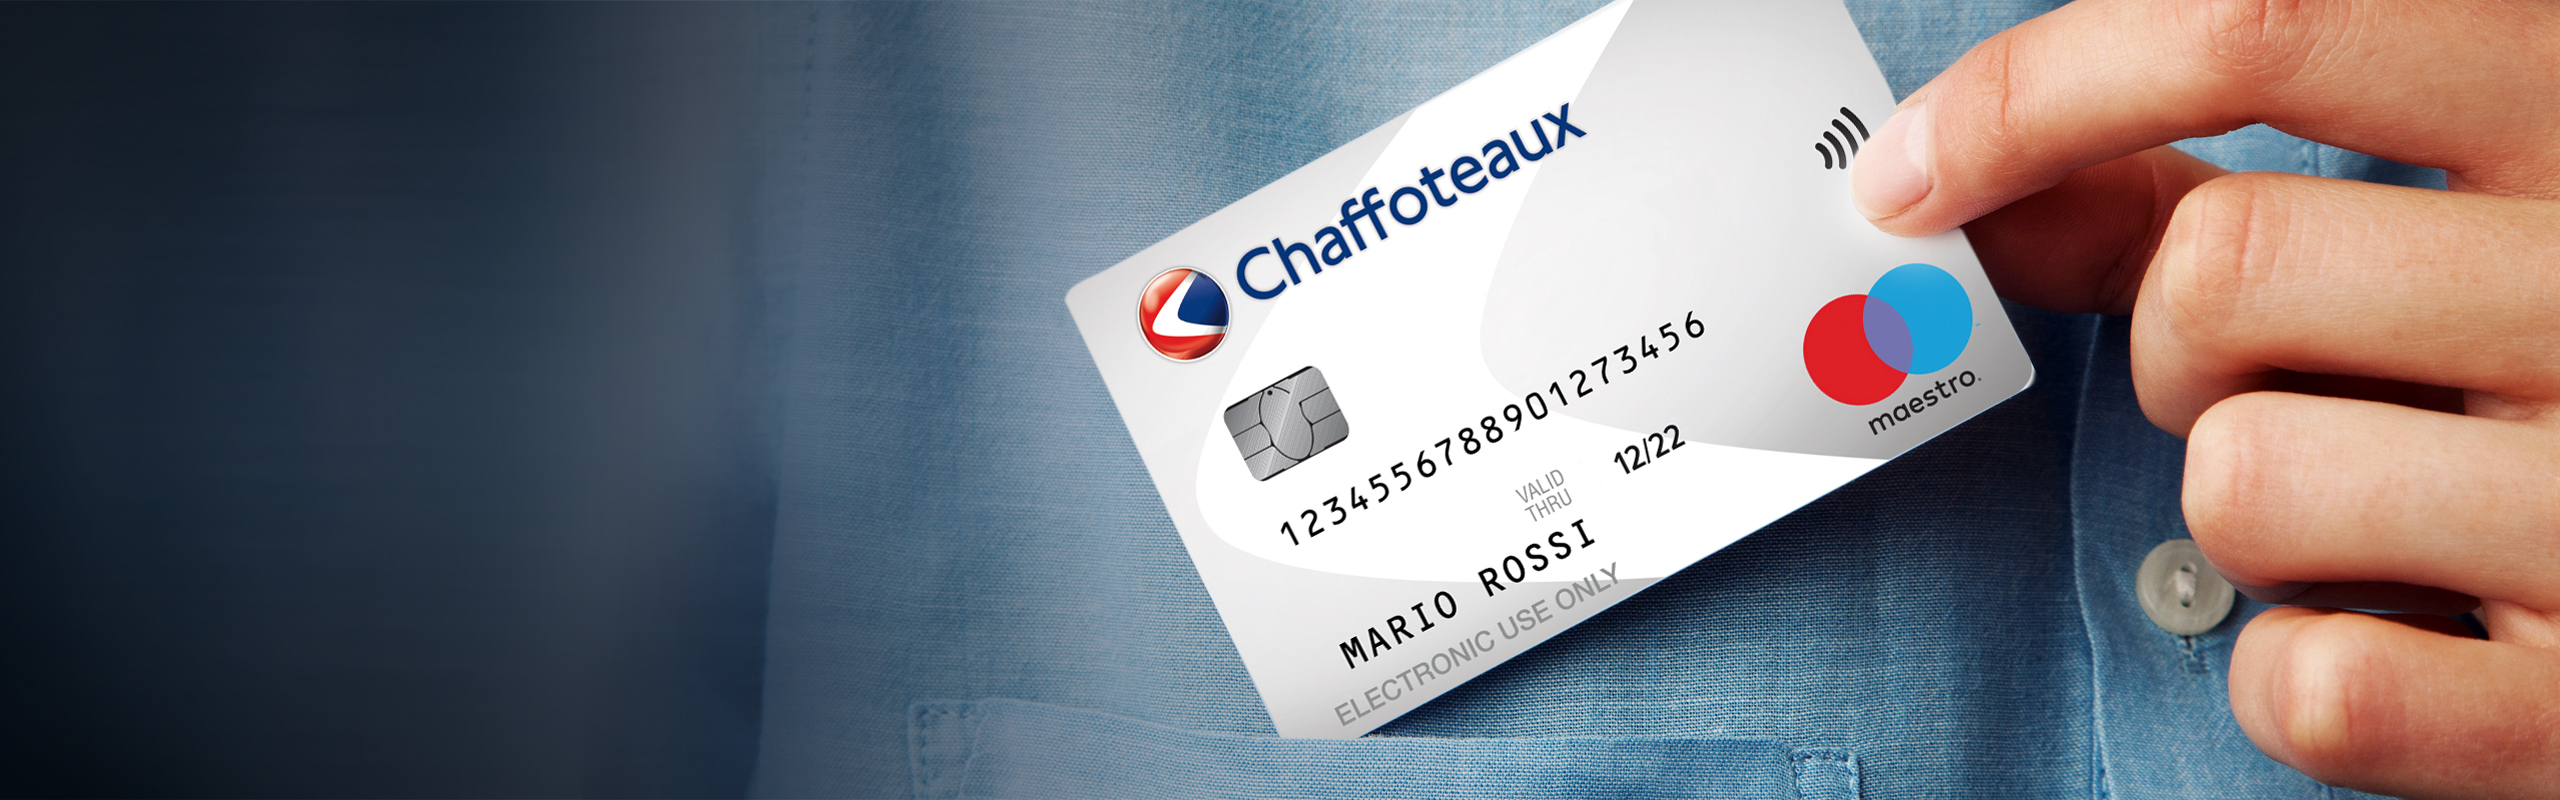 CHaffouteaux card banner